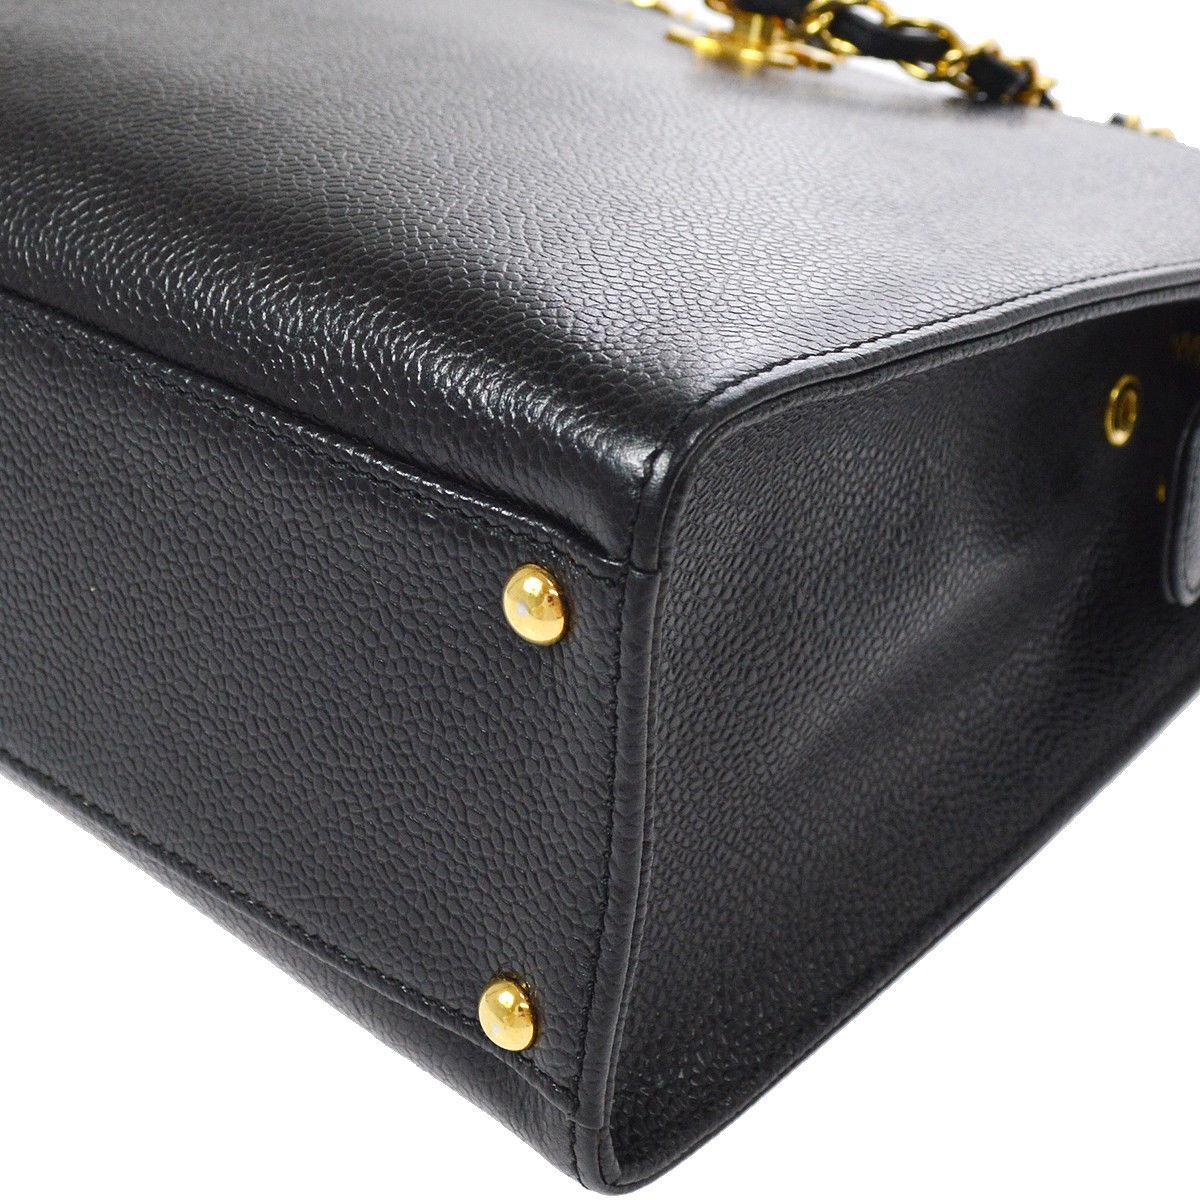 Chanel Black Caviar Leather Zip Carryall Travel Shopper Shoulder Tote Bag 1